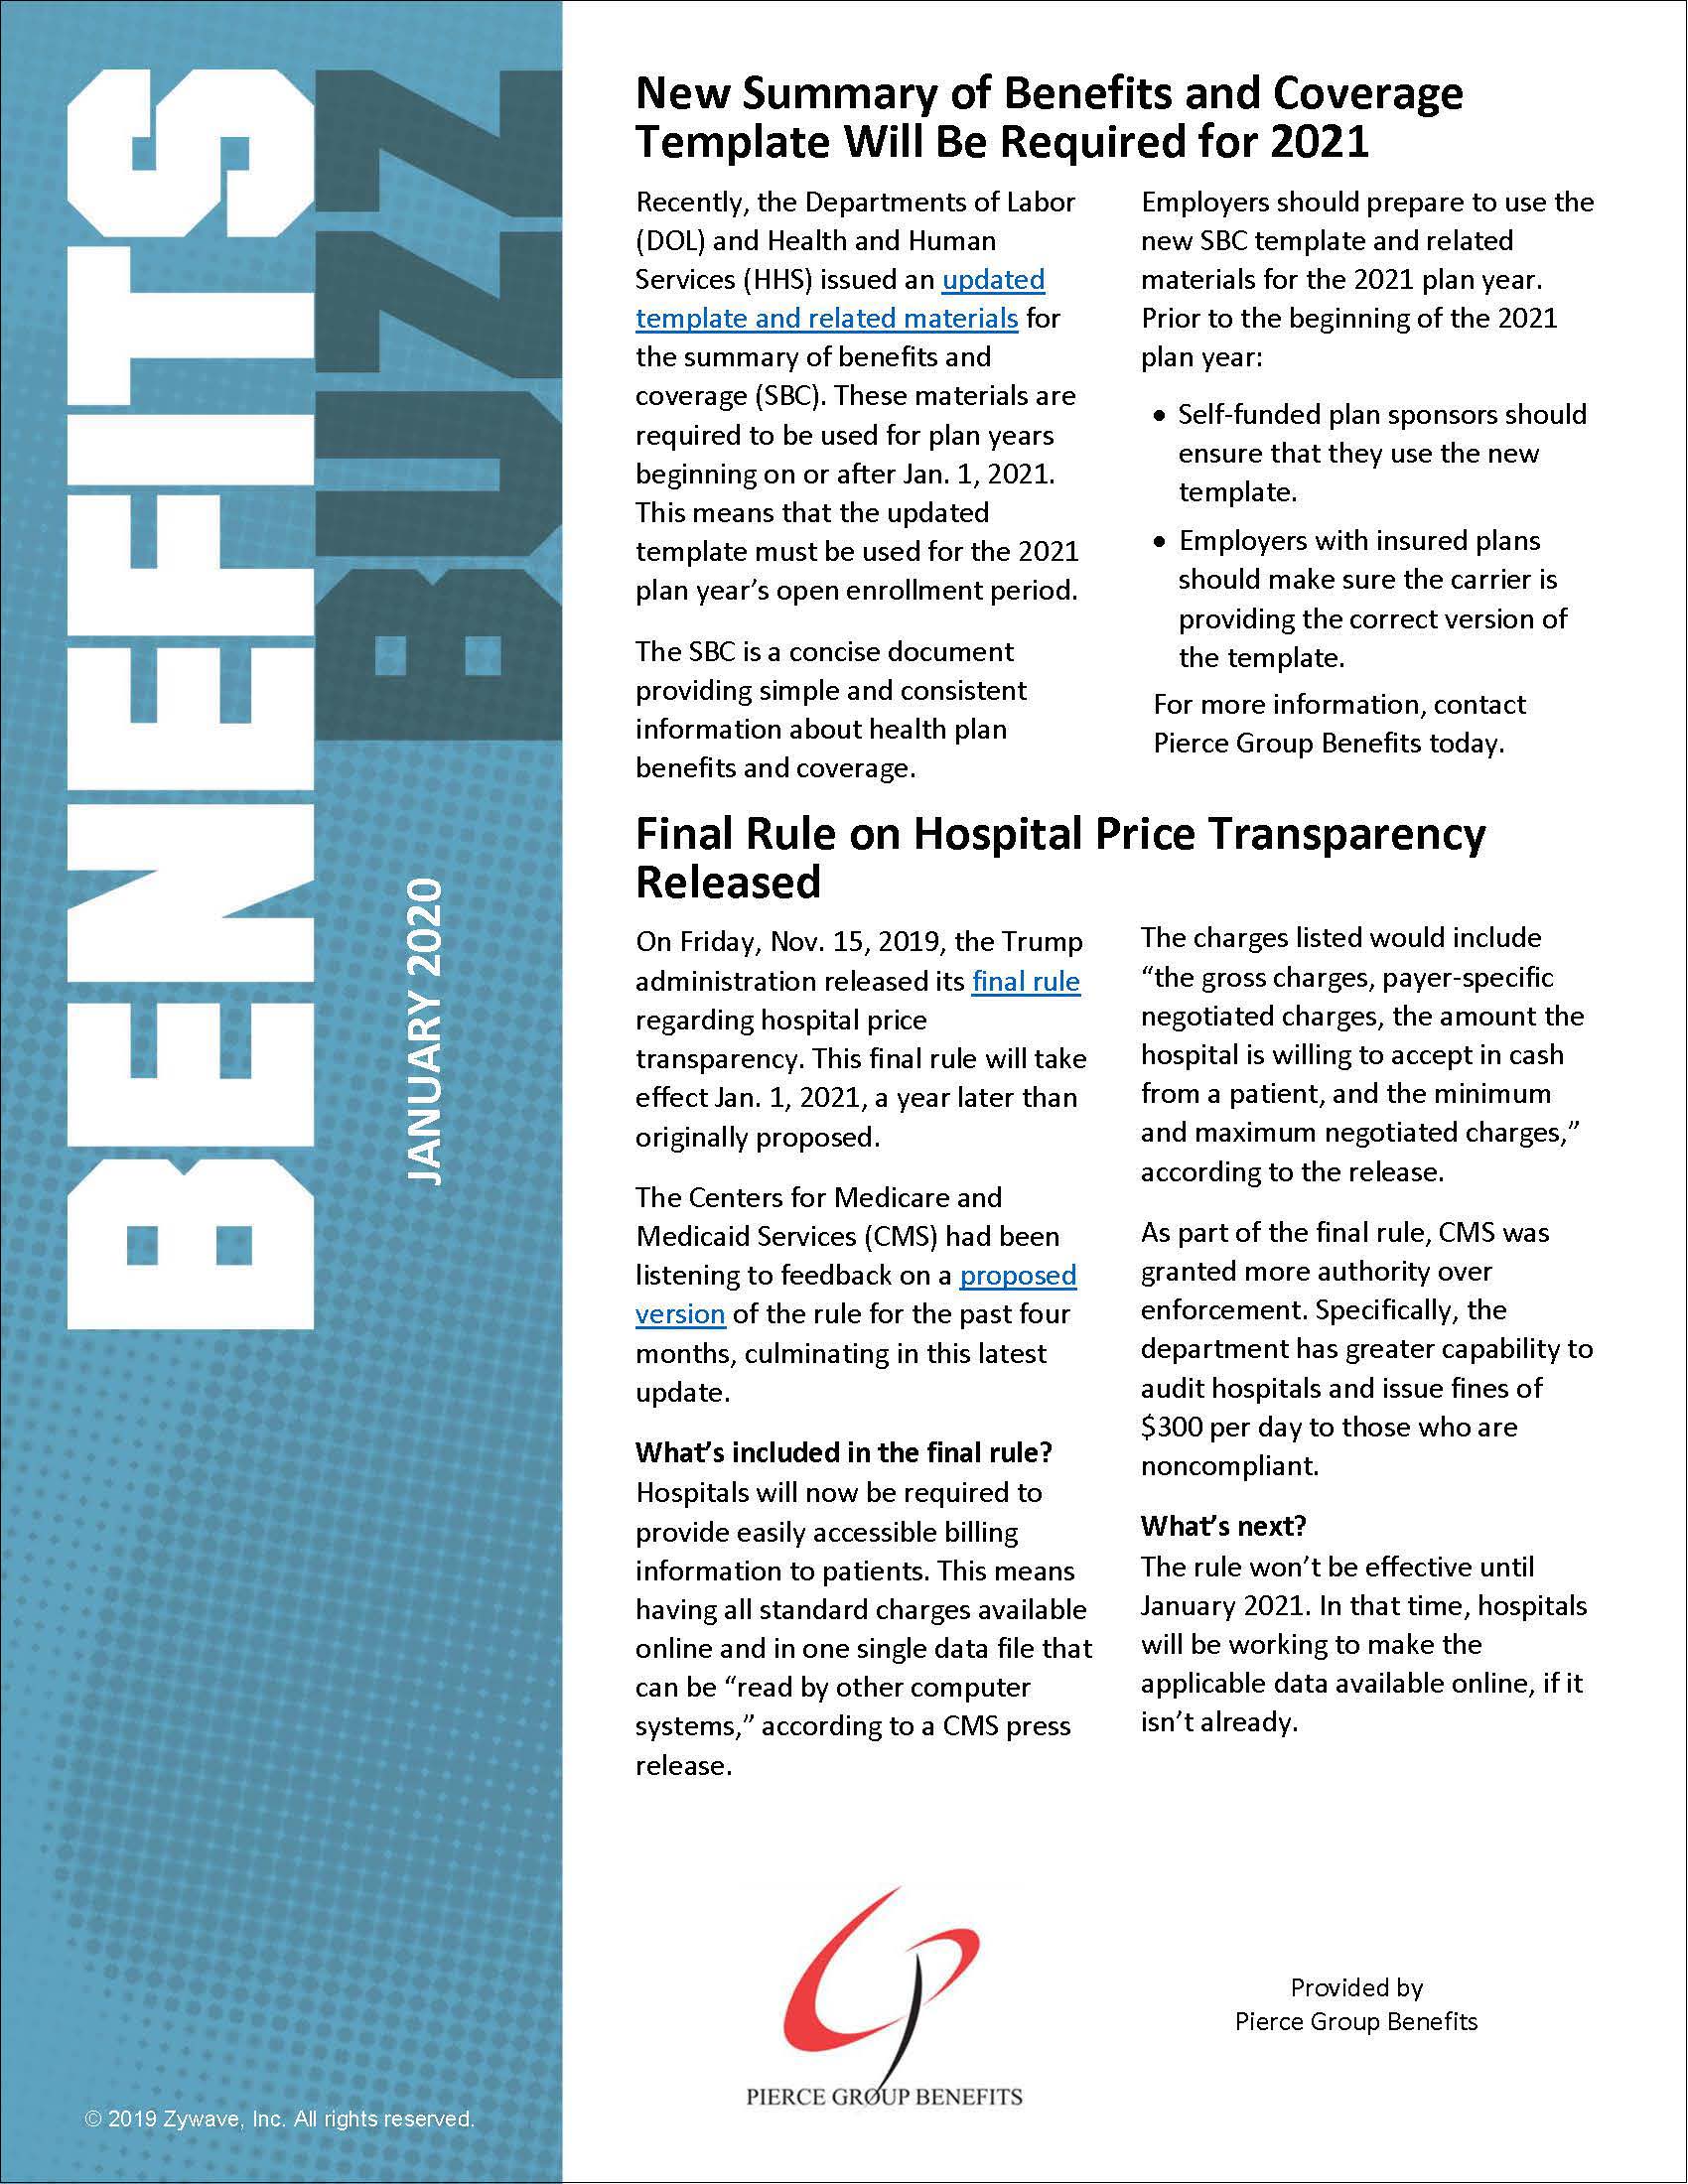 Benefits Newsletter – January 2020 – Pierce Group Benefits